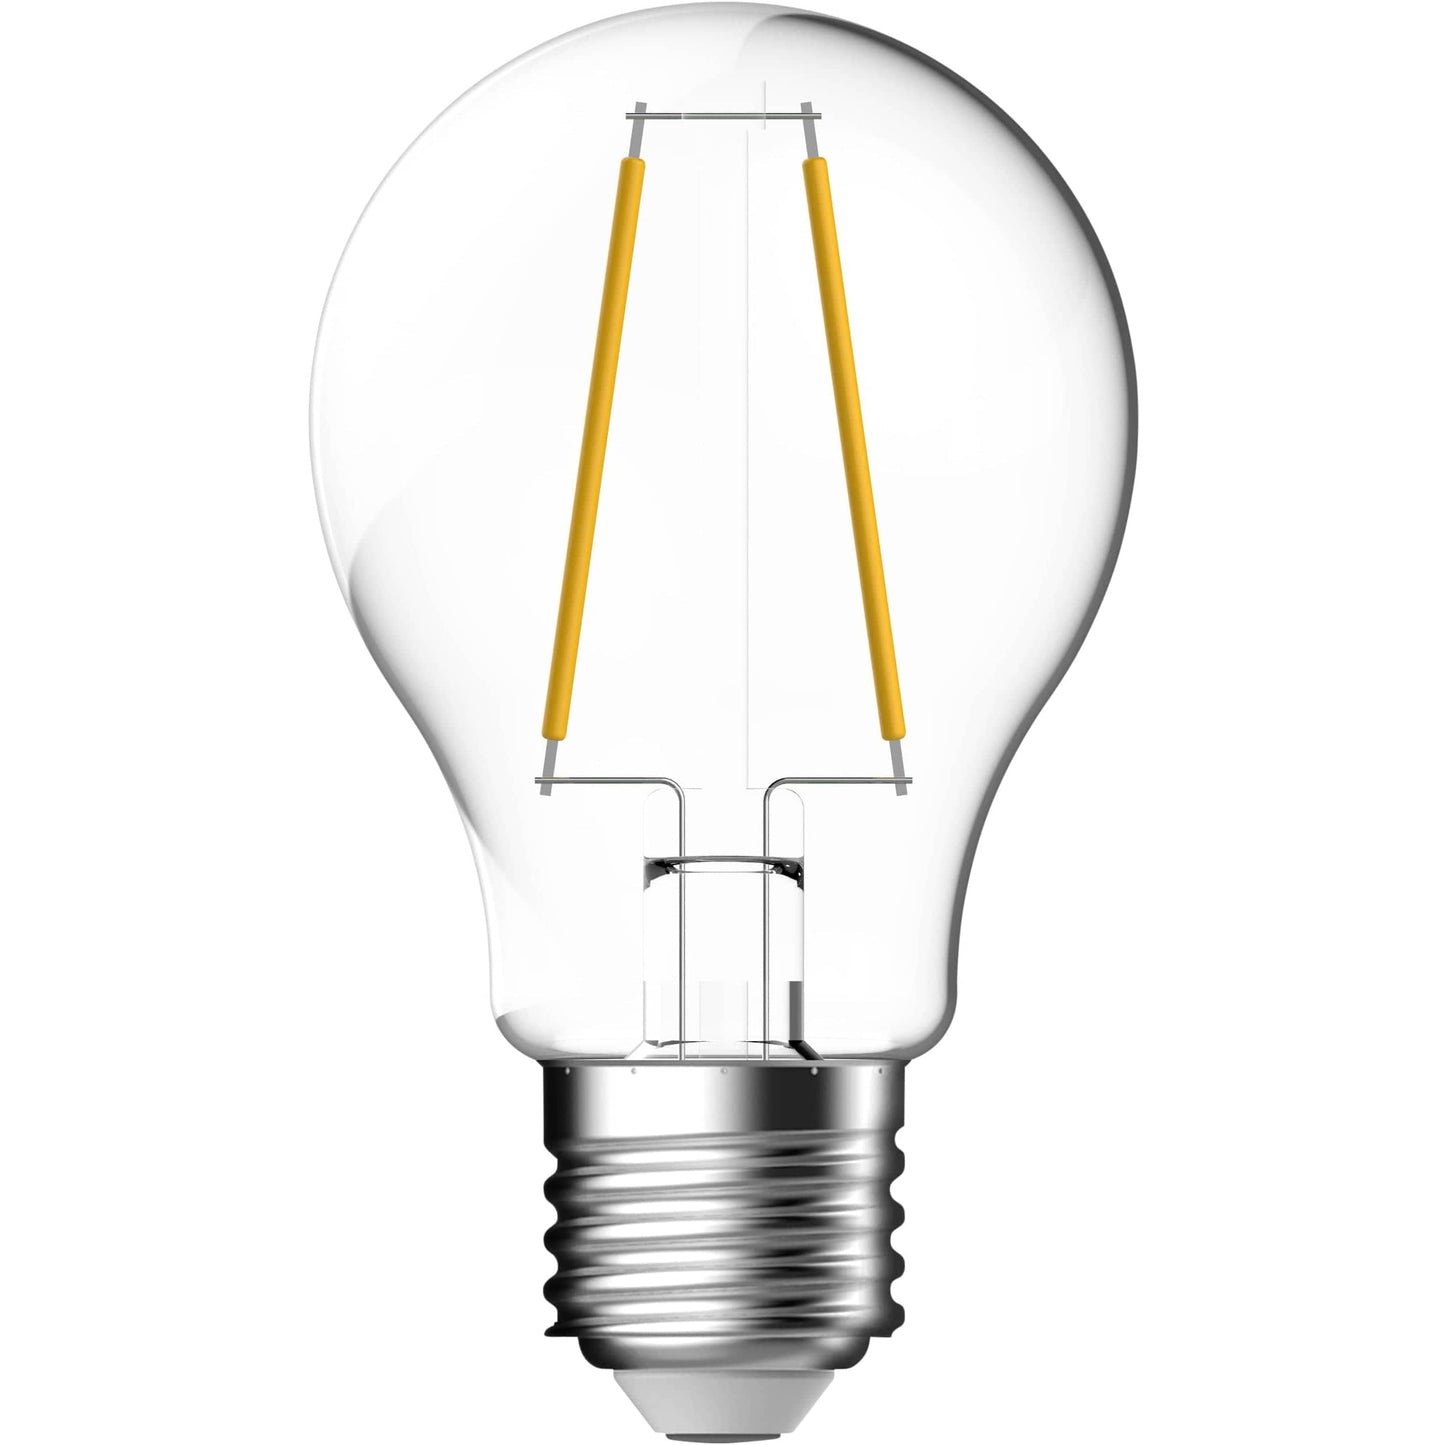 Energetic Light Bulbs Single E27 Clear Decorative Bulb, Warm Glow, 7.8W